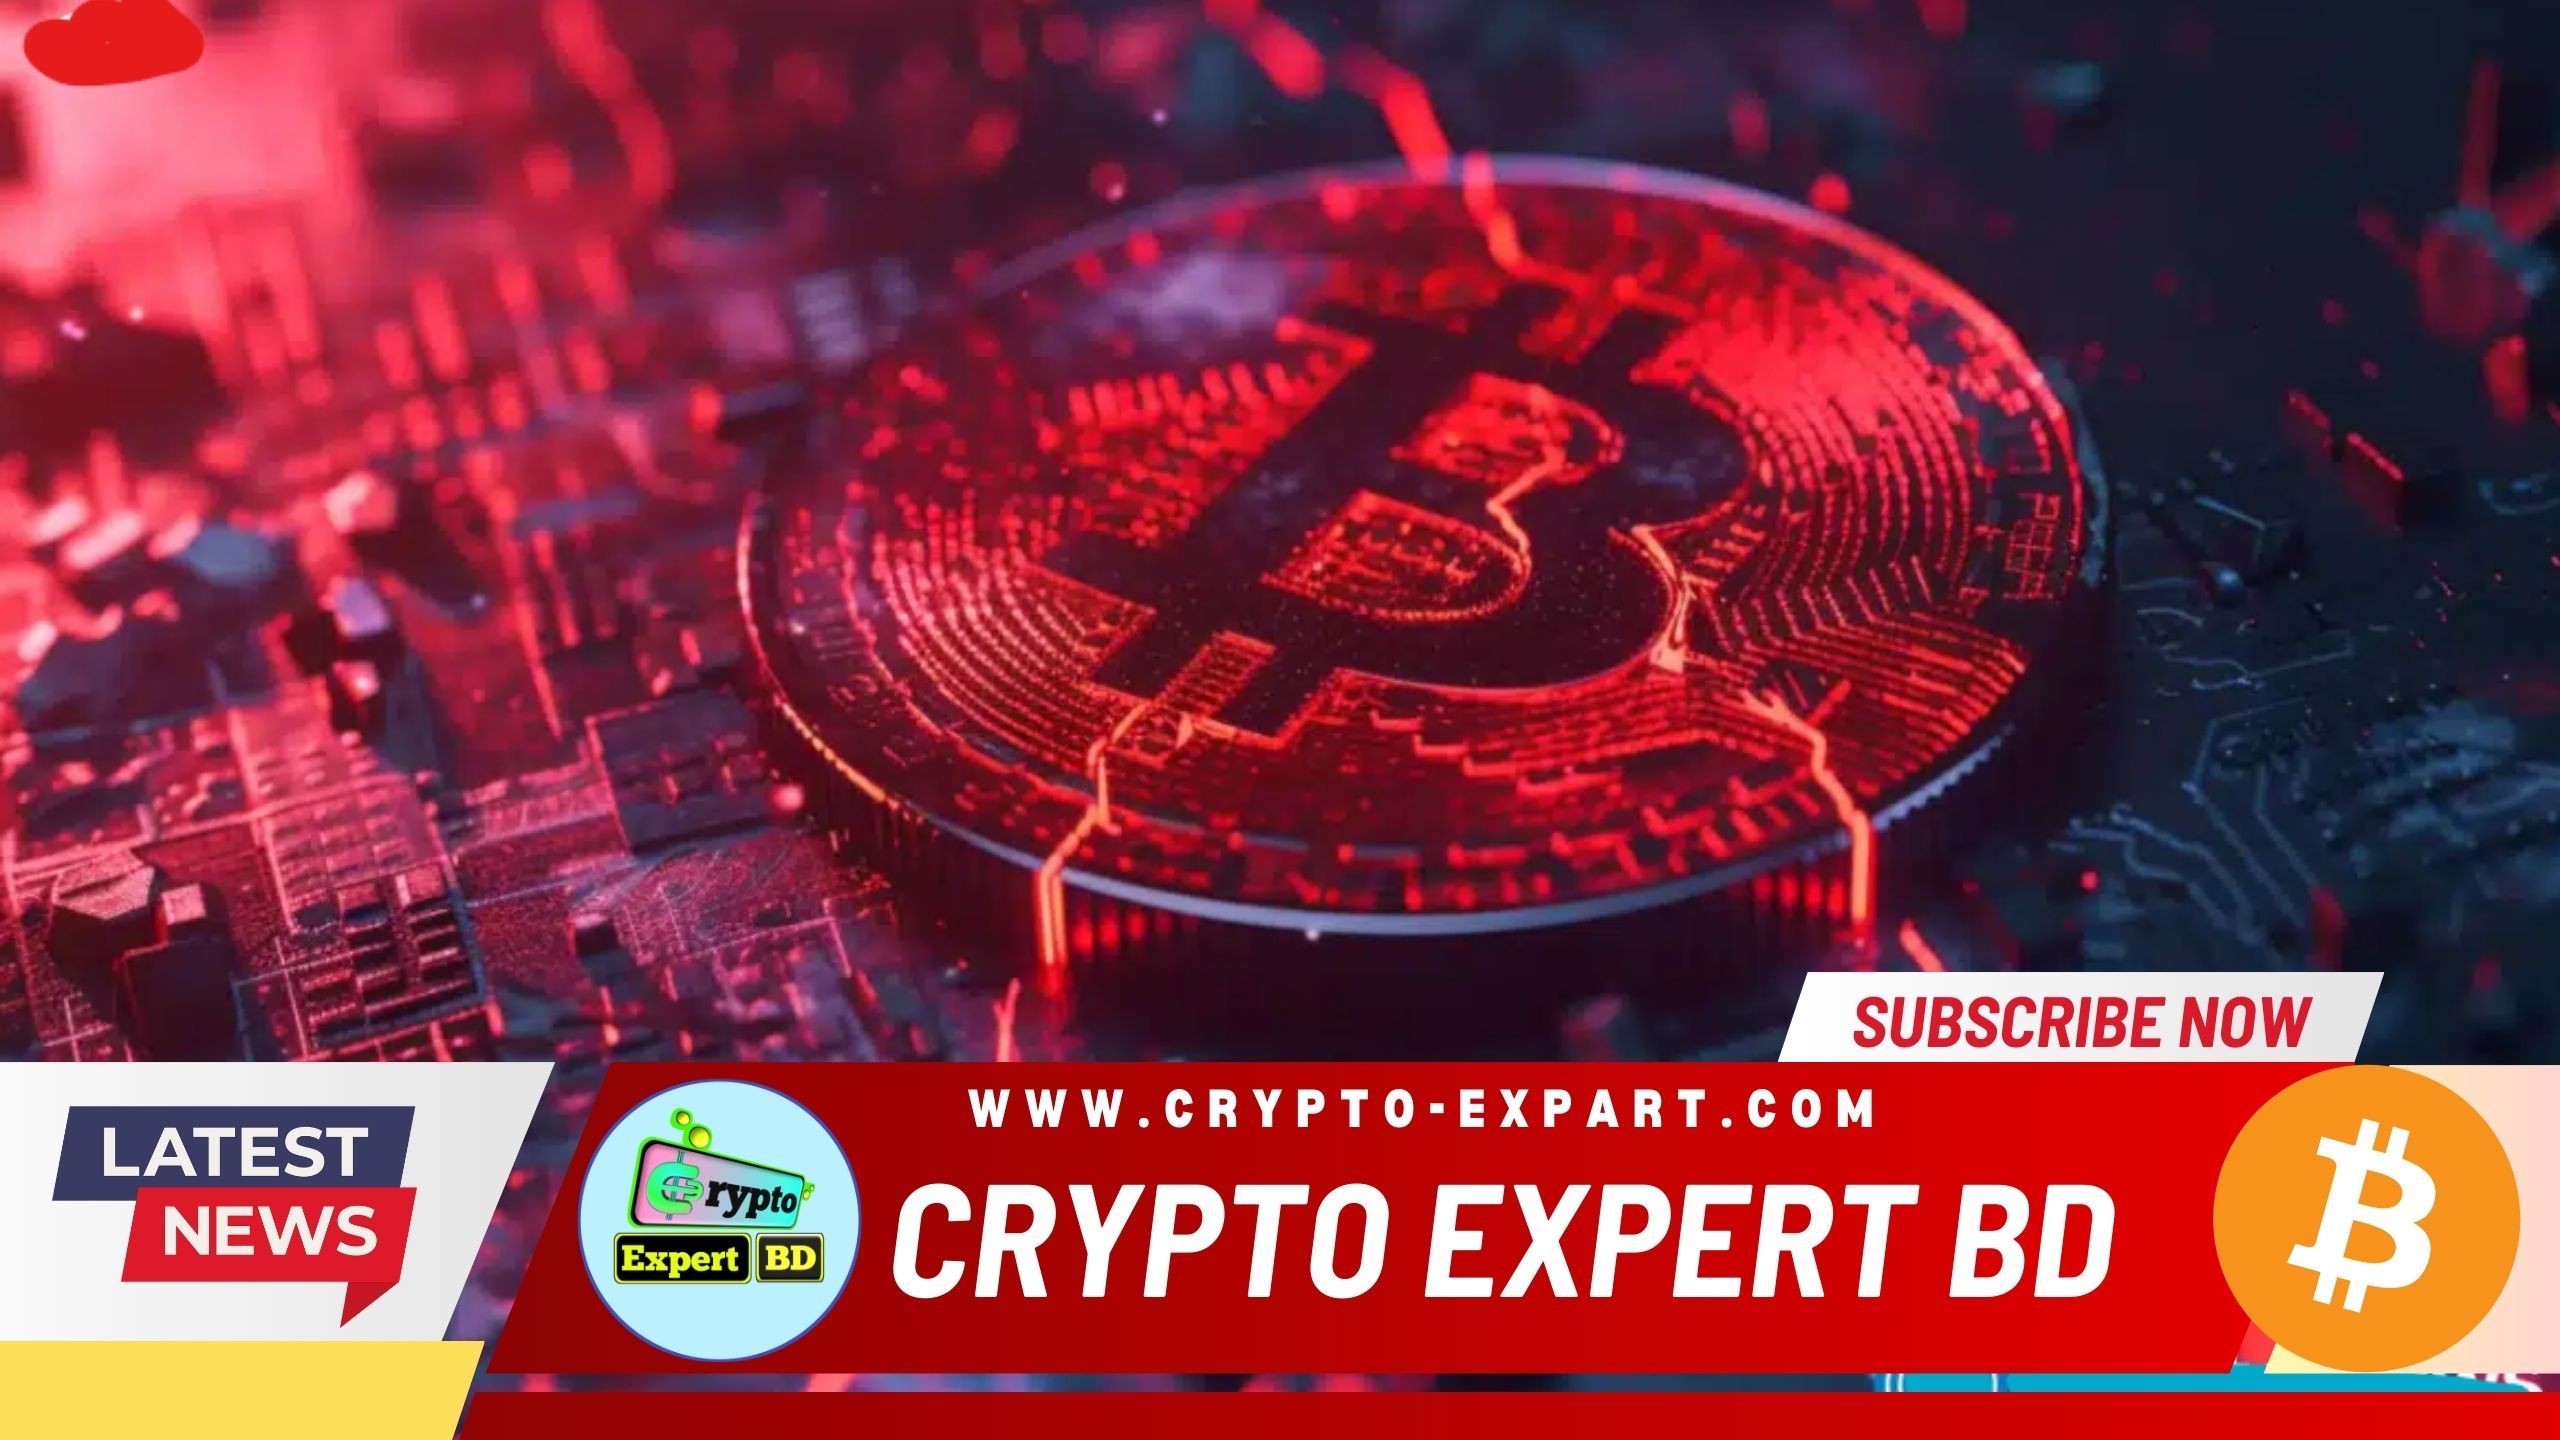 BitMEX Launches Investigation into Suspicious Trading Activity Sending Bitcoin to $8.9k